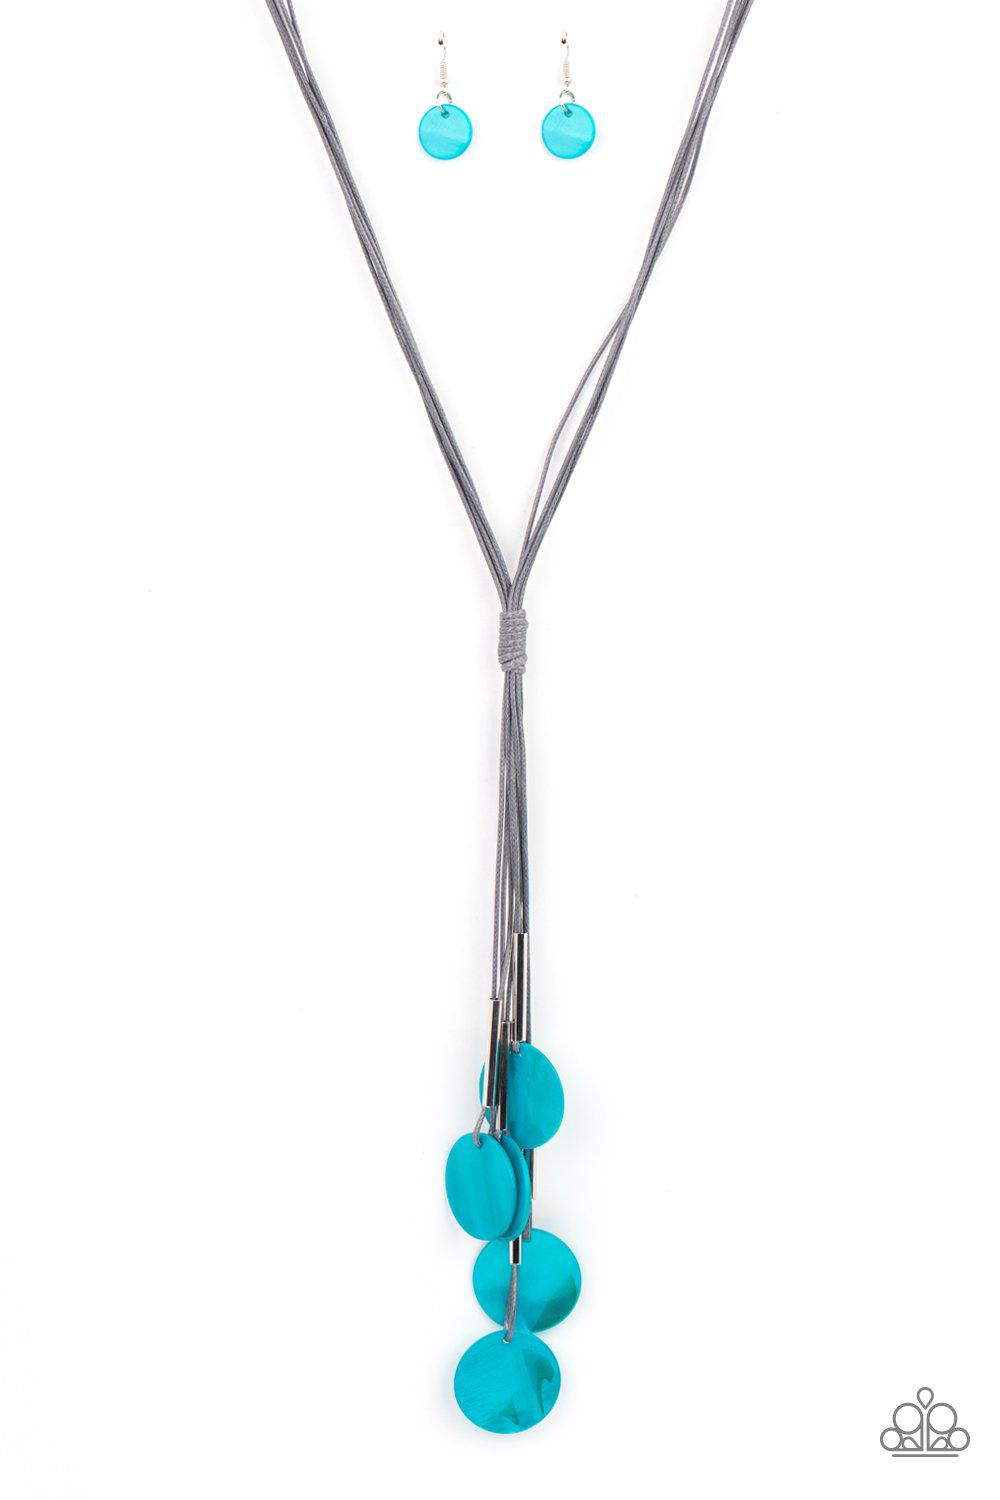 Tidal Tassels Blue Shell-like Tassel Necklace - Paparazzi Accessories- lightbox - CarasShop.com - $5 Jewelry by Cara Jewels